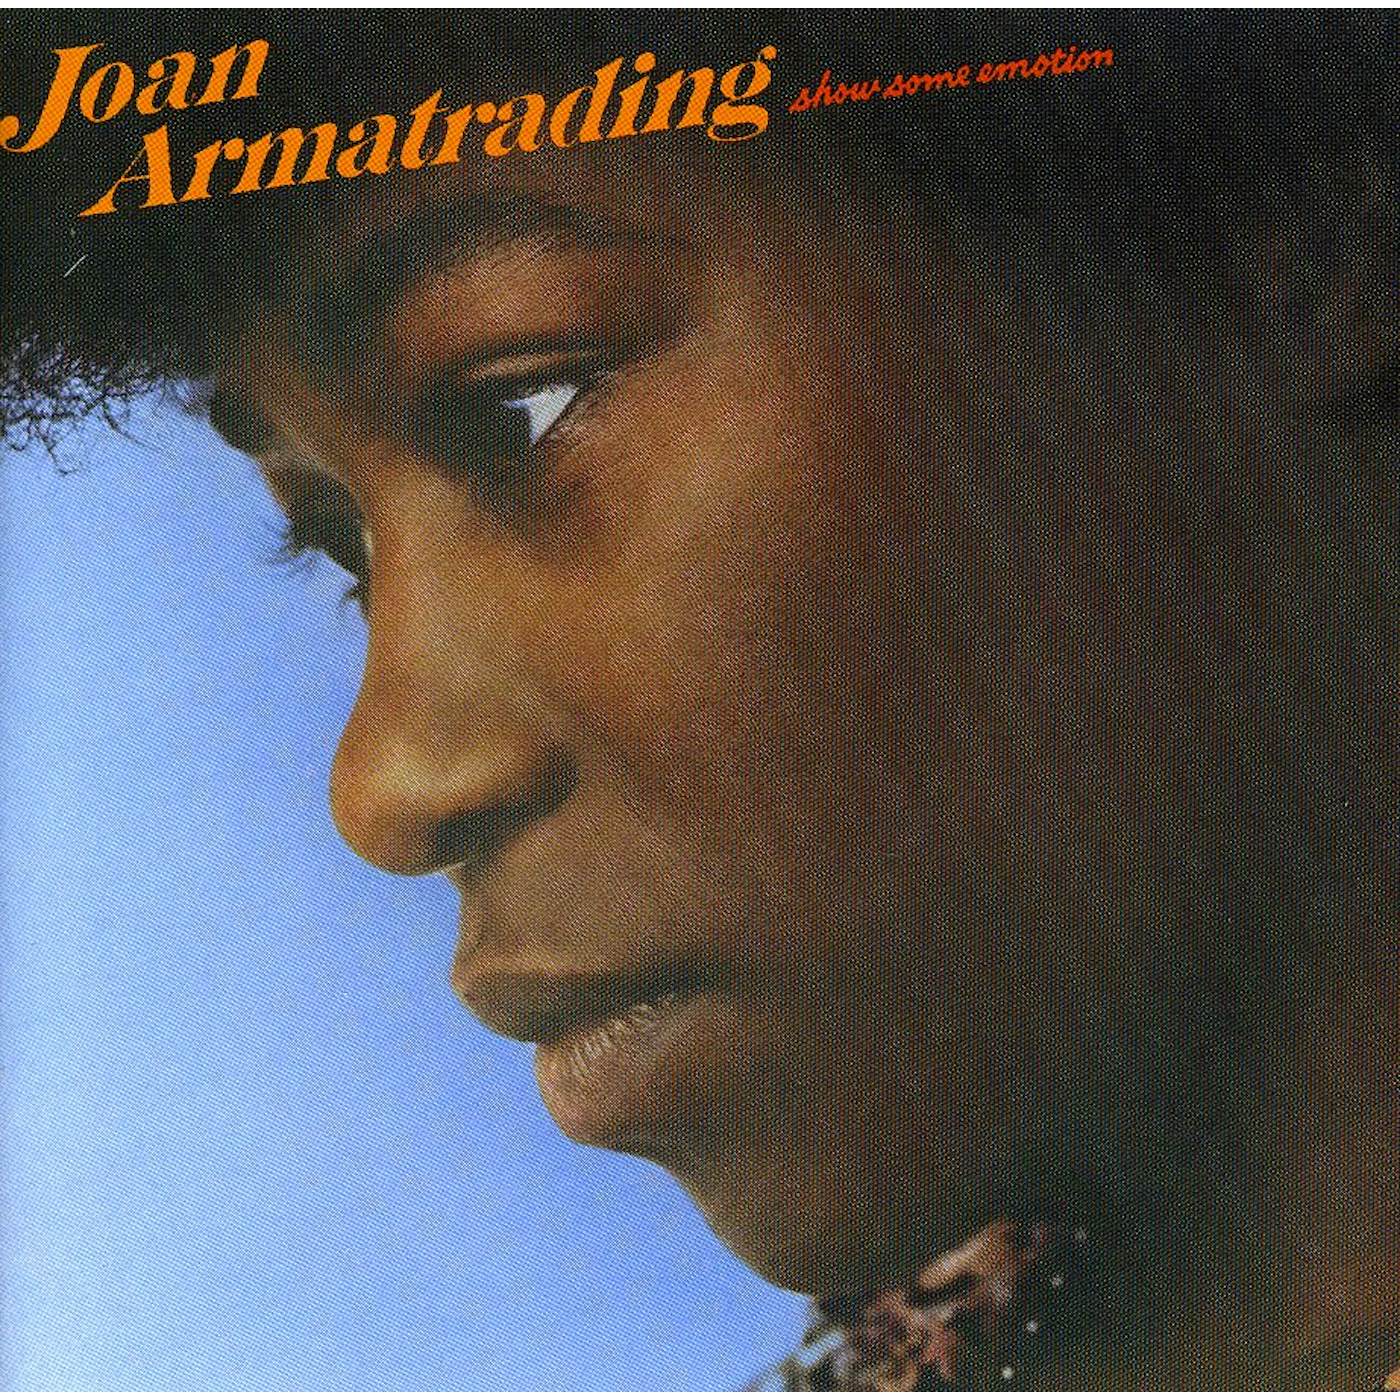 Joan Armatrading SHOW SOME EMOTION CD